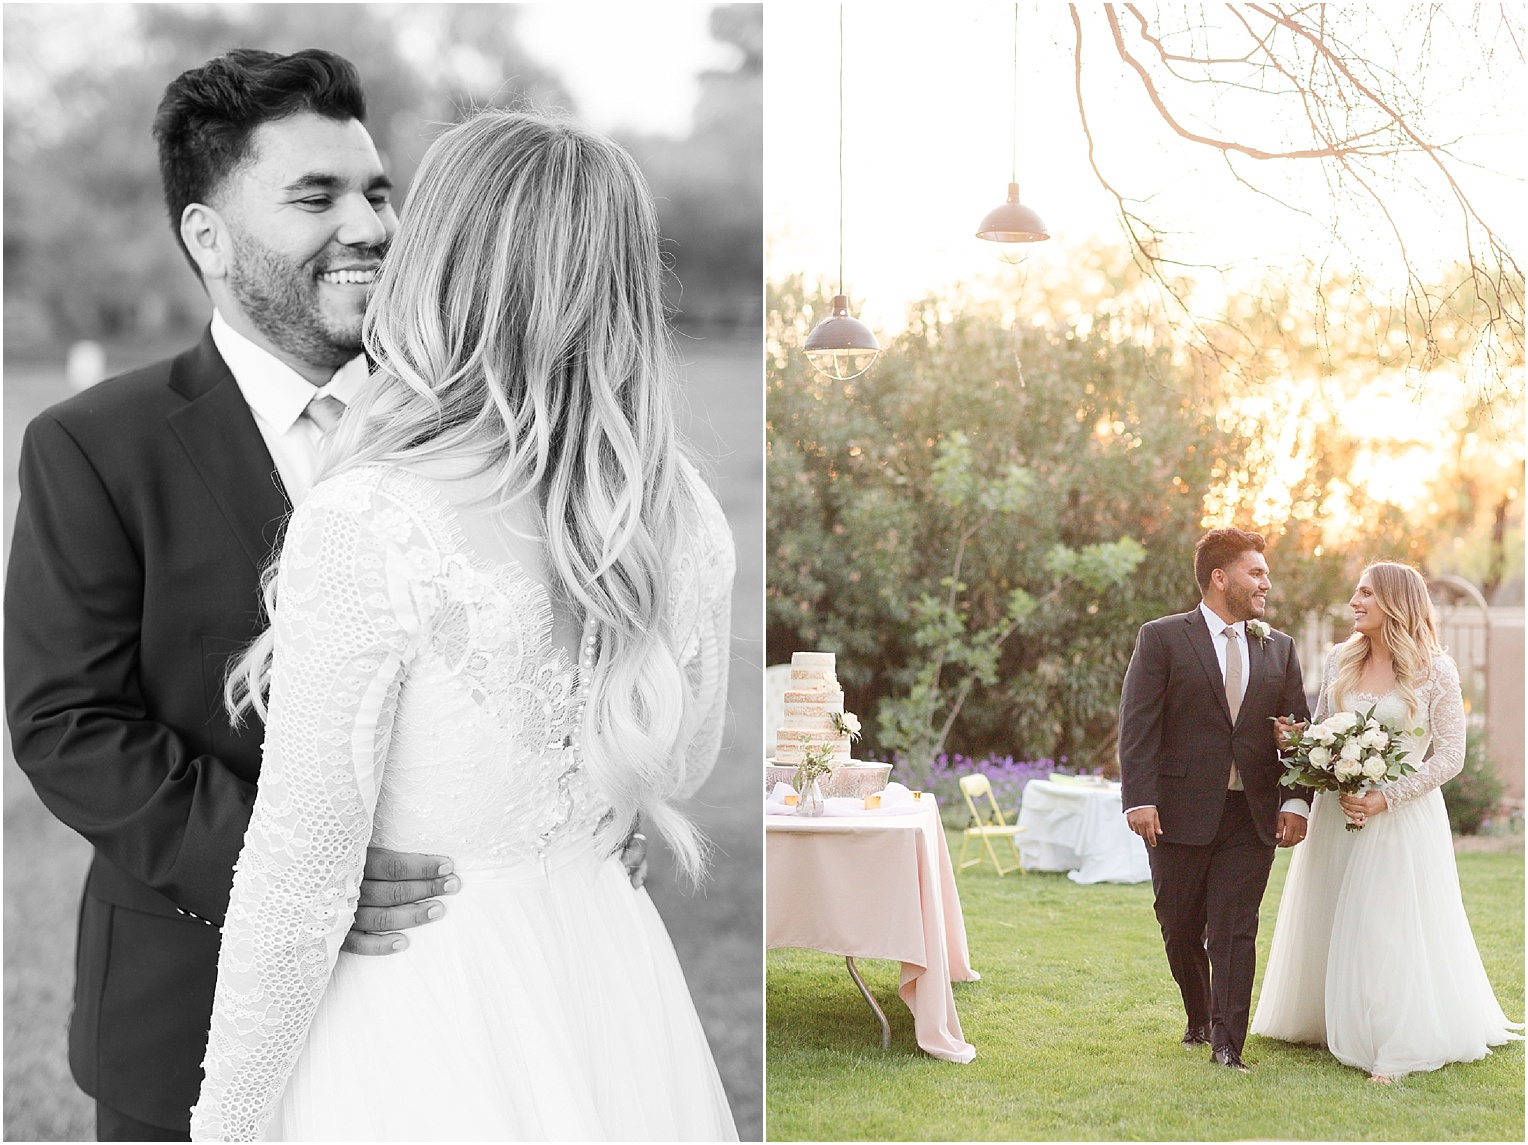 Intimate Backyard Wedding Tucson, AZ Chanel + Eddie bride and groom sunset portraits